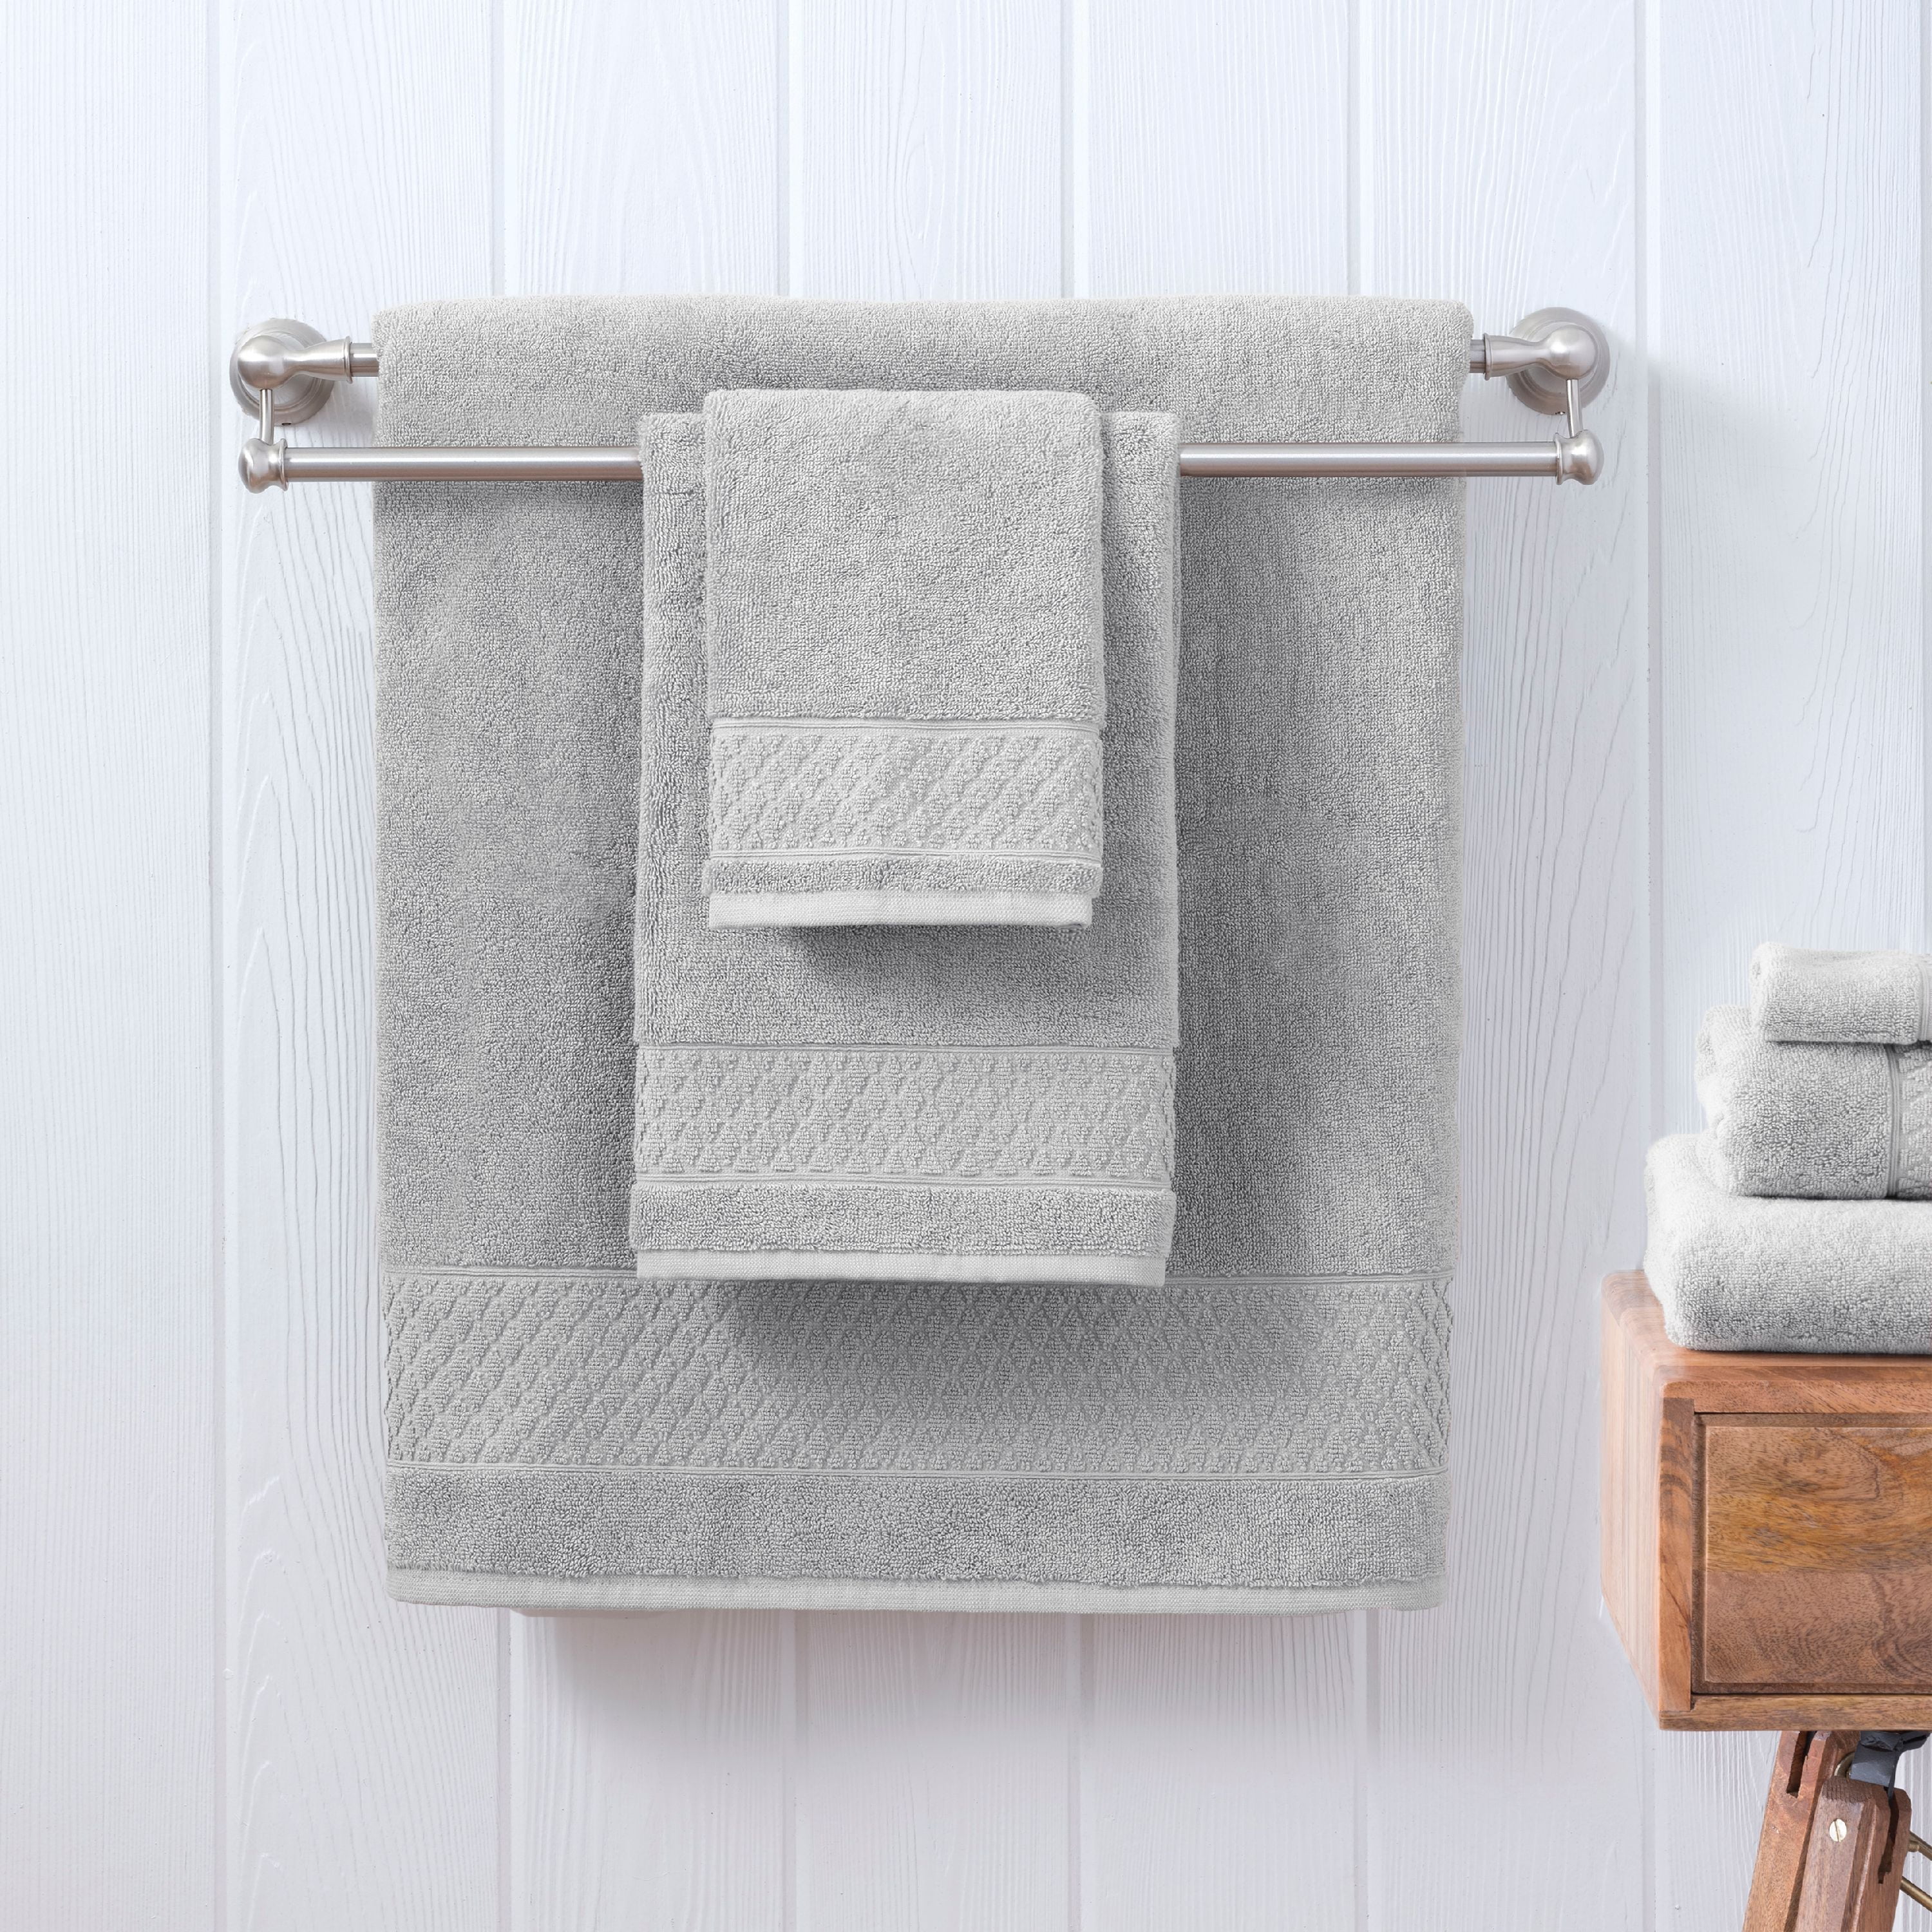 Purely Indulgent 100% Hydrocotton | Includes: 2 Luxury Bath Towels, 2 Hand Towels & 2 Washcloths | Quality, Ultra Soft Towel Set | 6 Piece Set